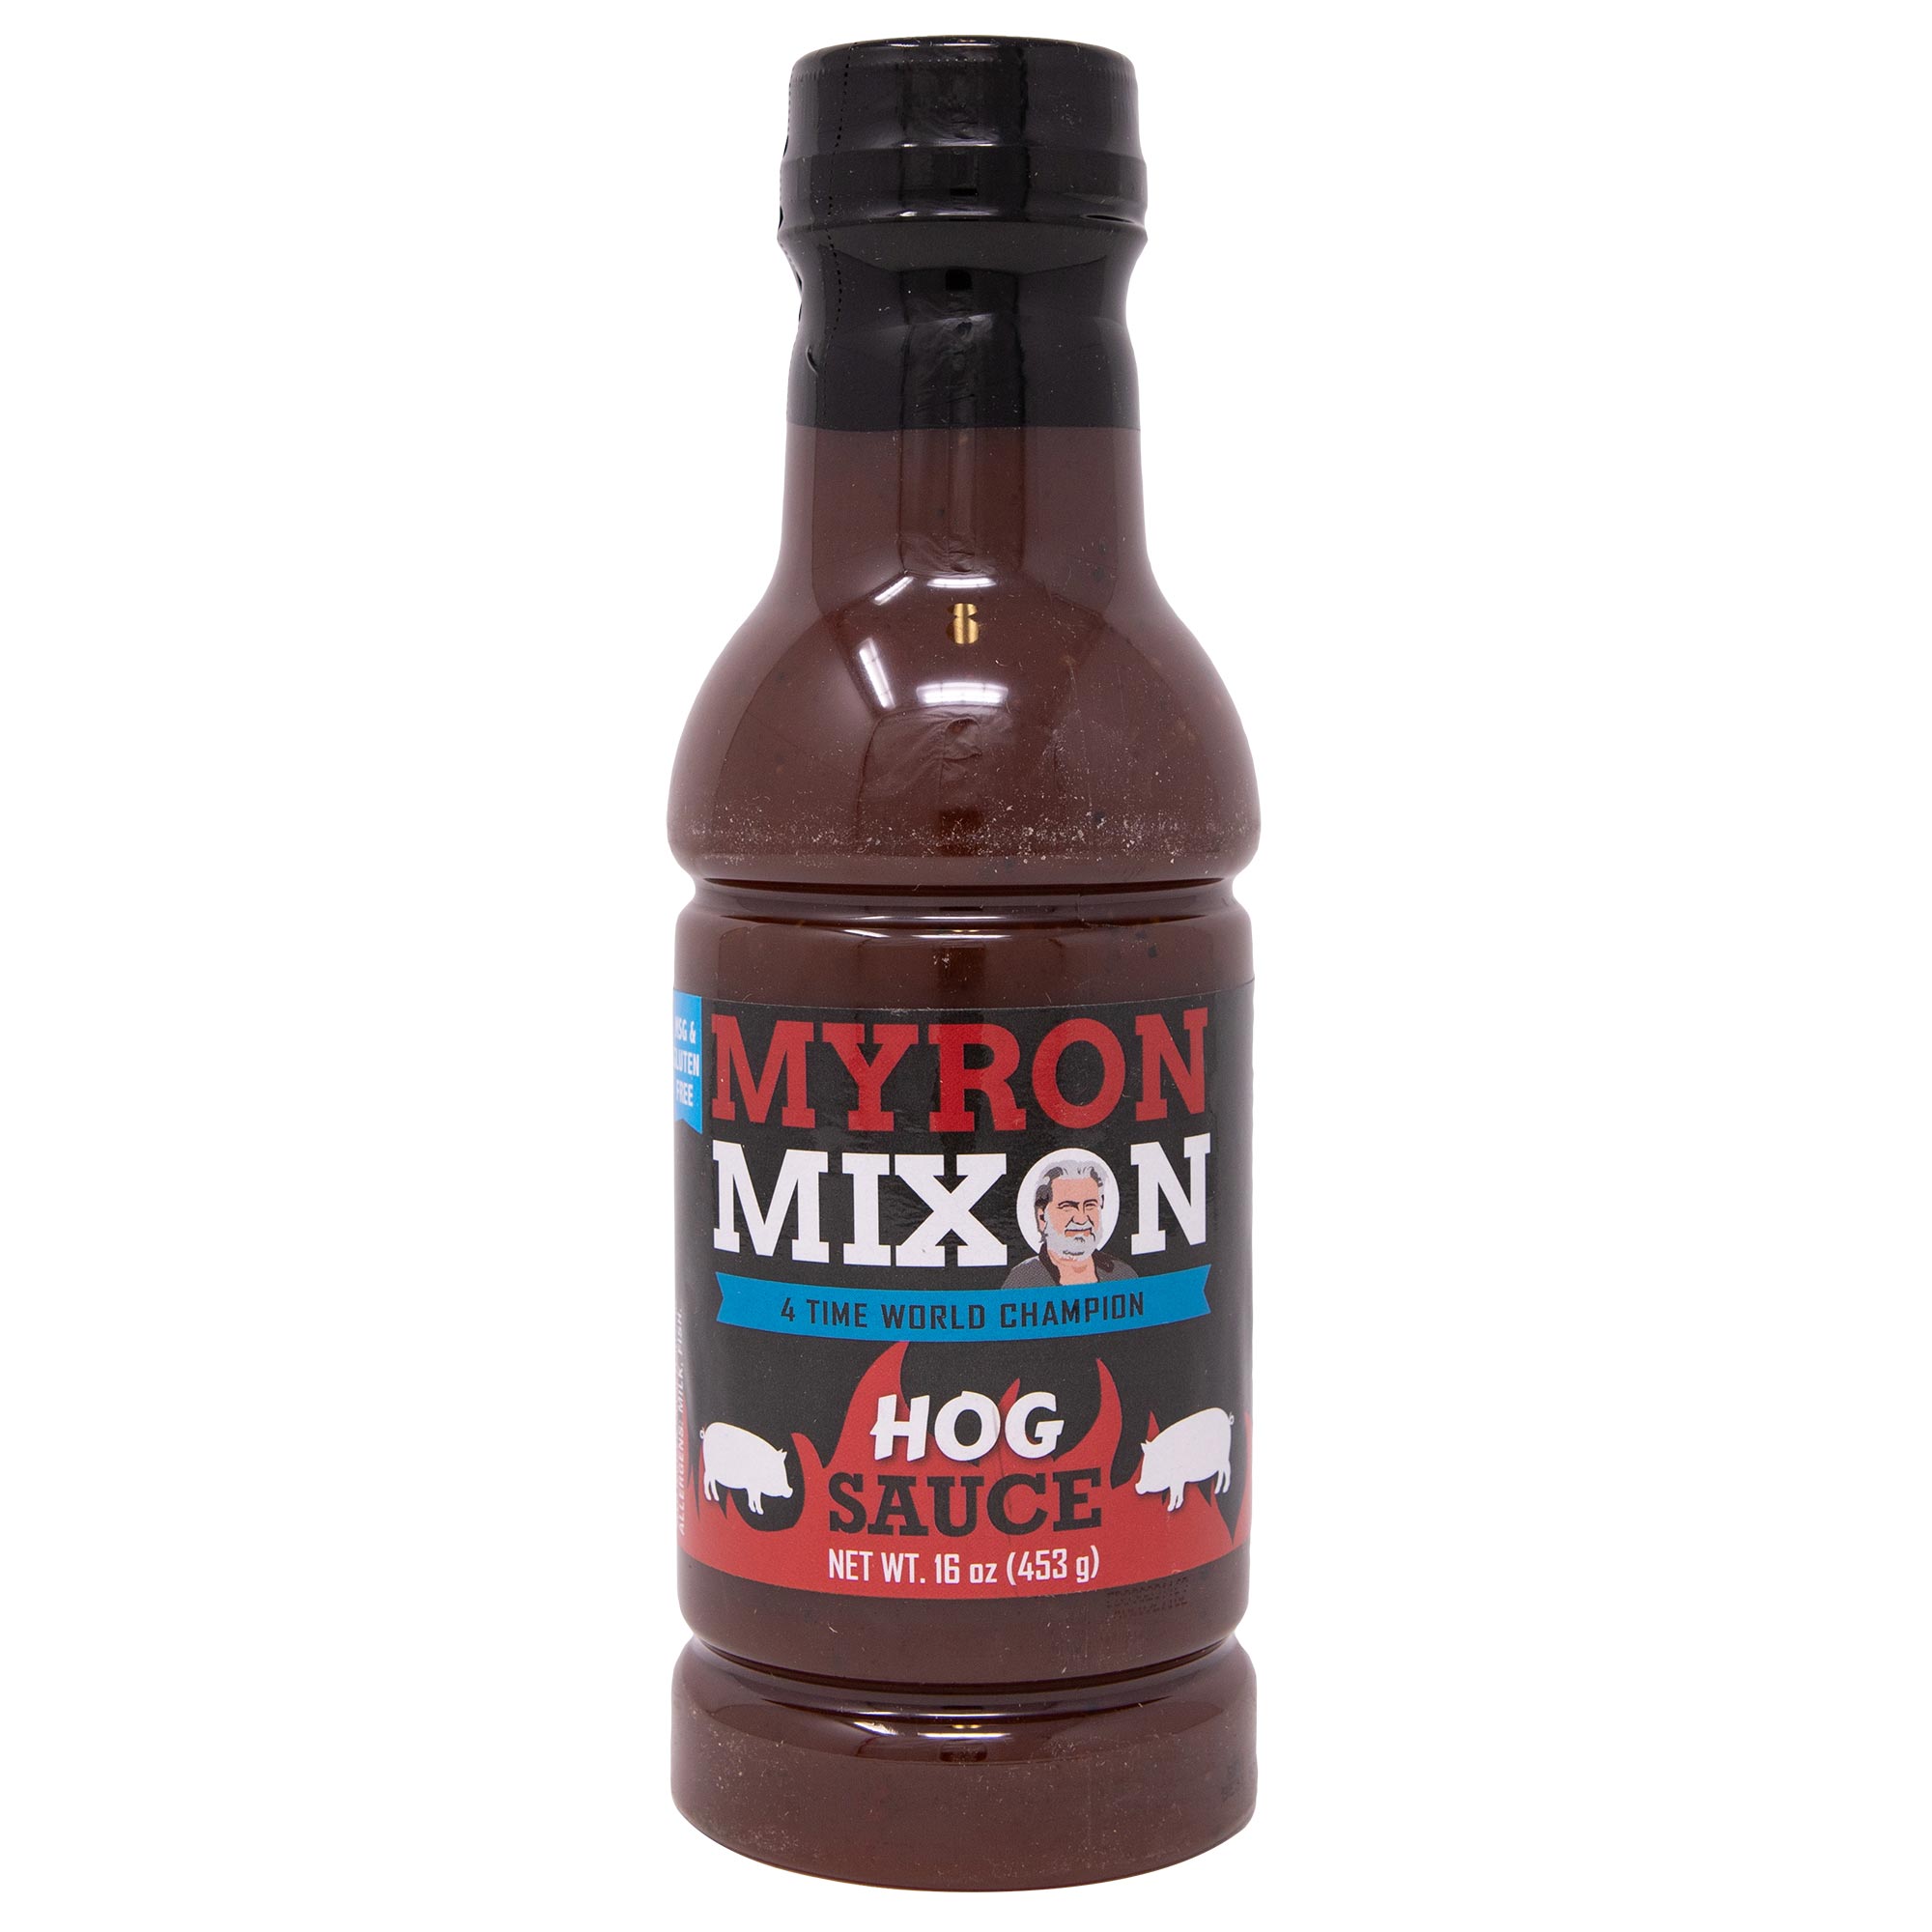 Myron Mixon Hog Sauce Meadow Creek Barbecue Supply